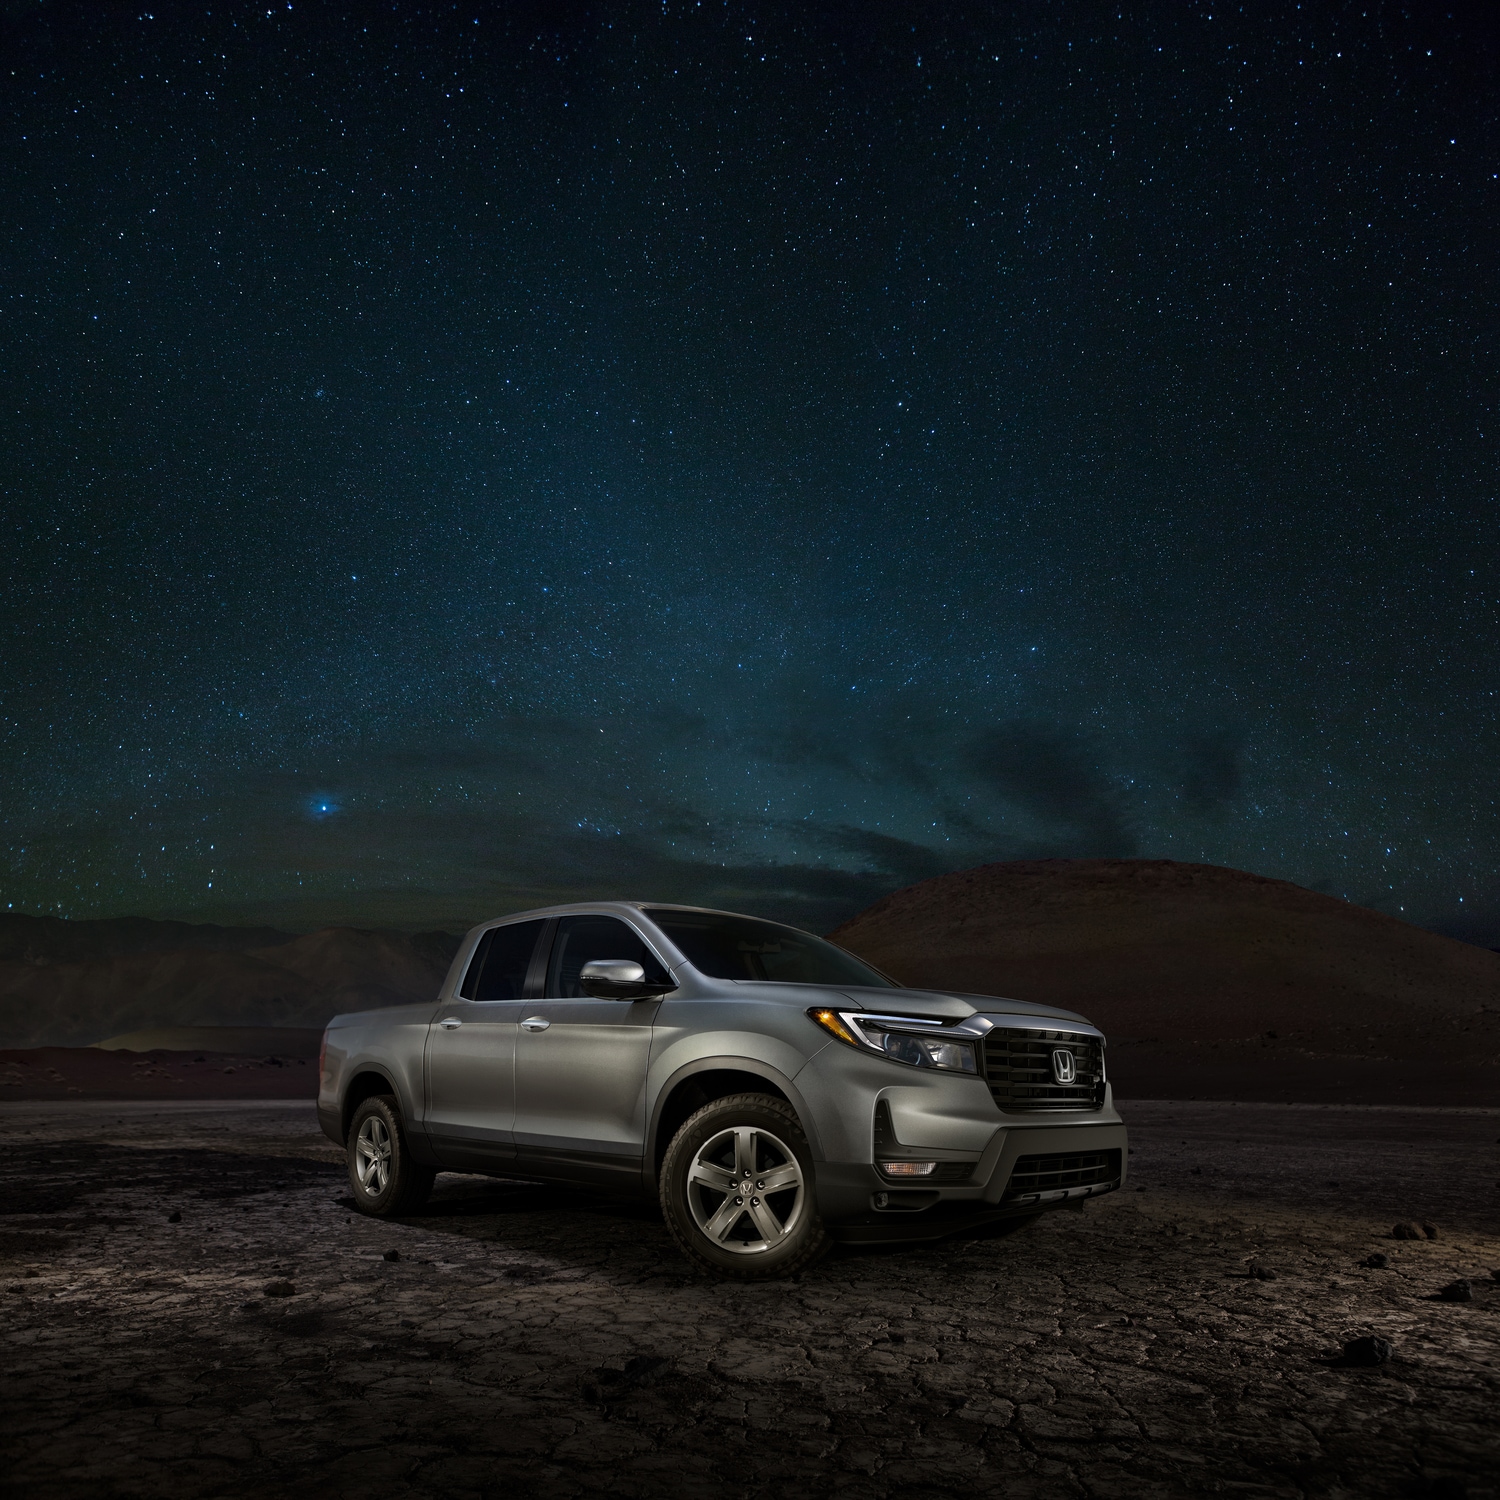 silver Honda Ridgeline truck parked in the desert at night